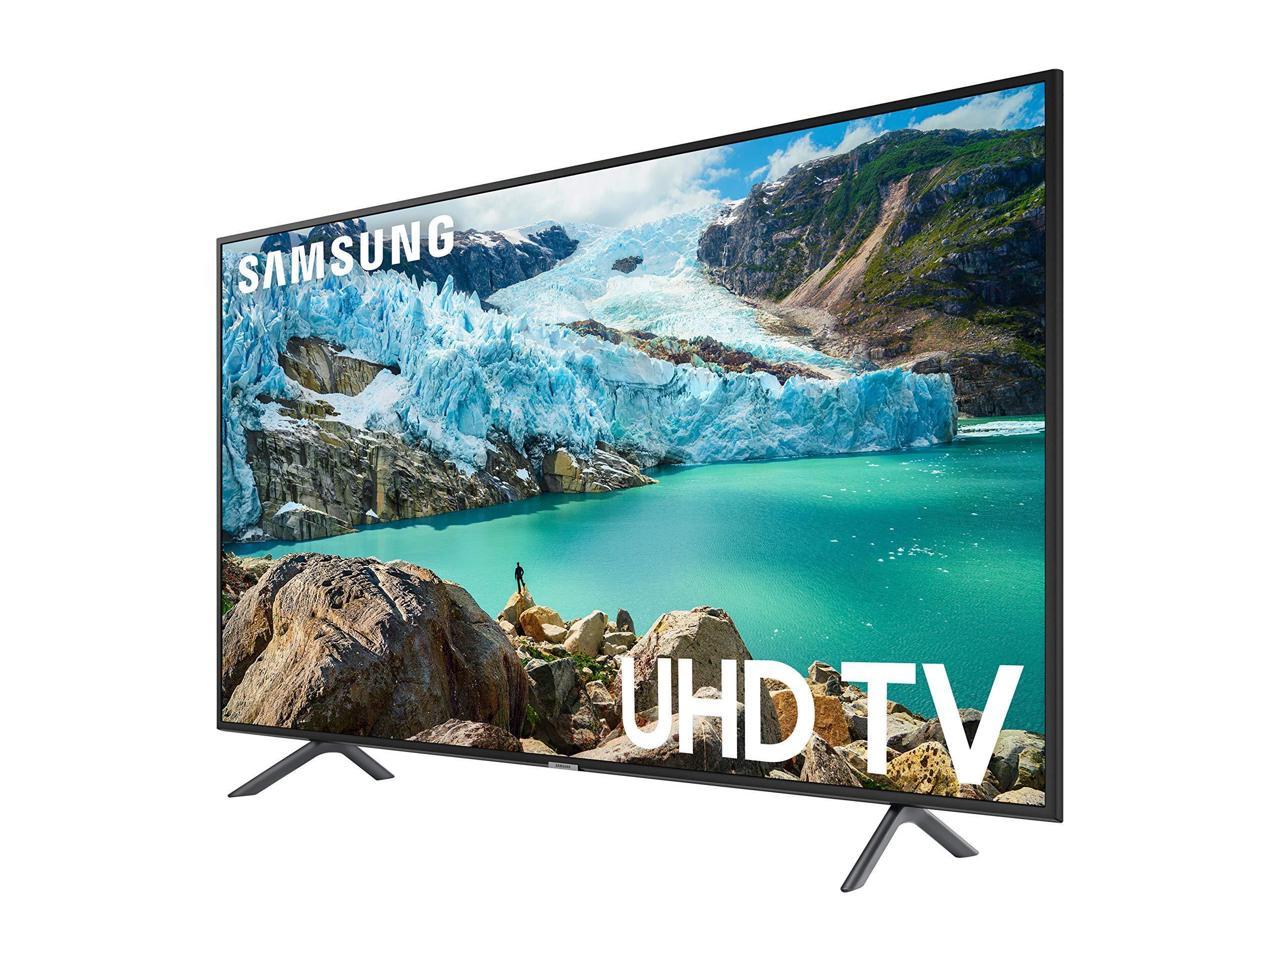 Samsung Ru7100 65 4k Smart Uhd Led Tv Un65ru7100fxza 2019 